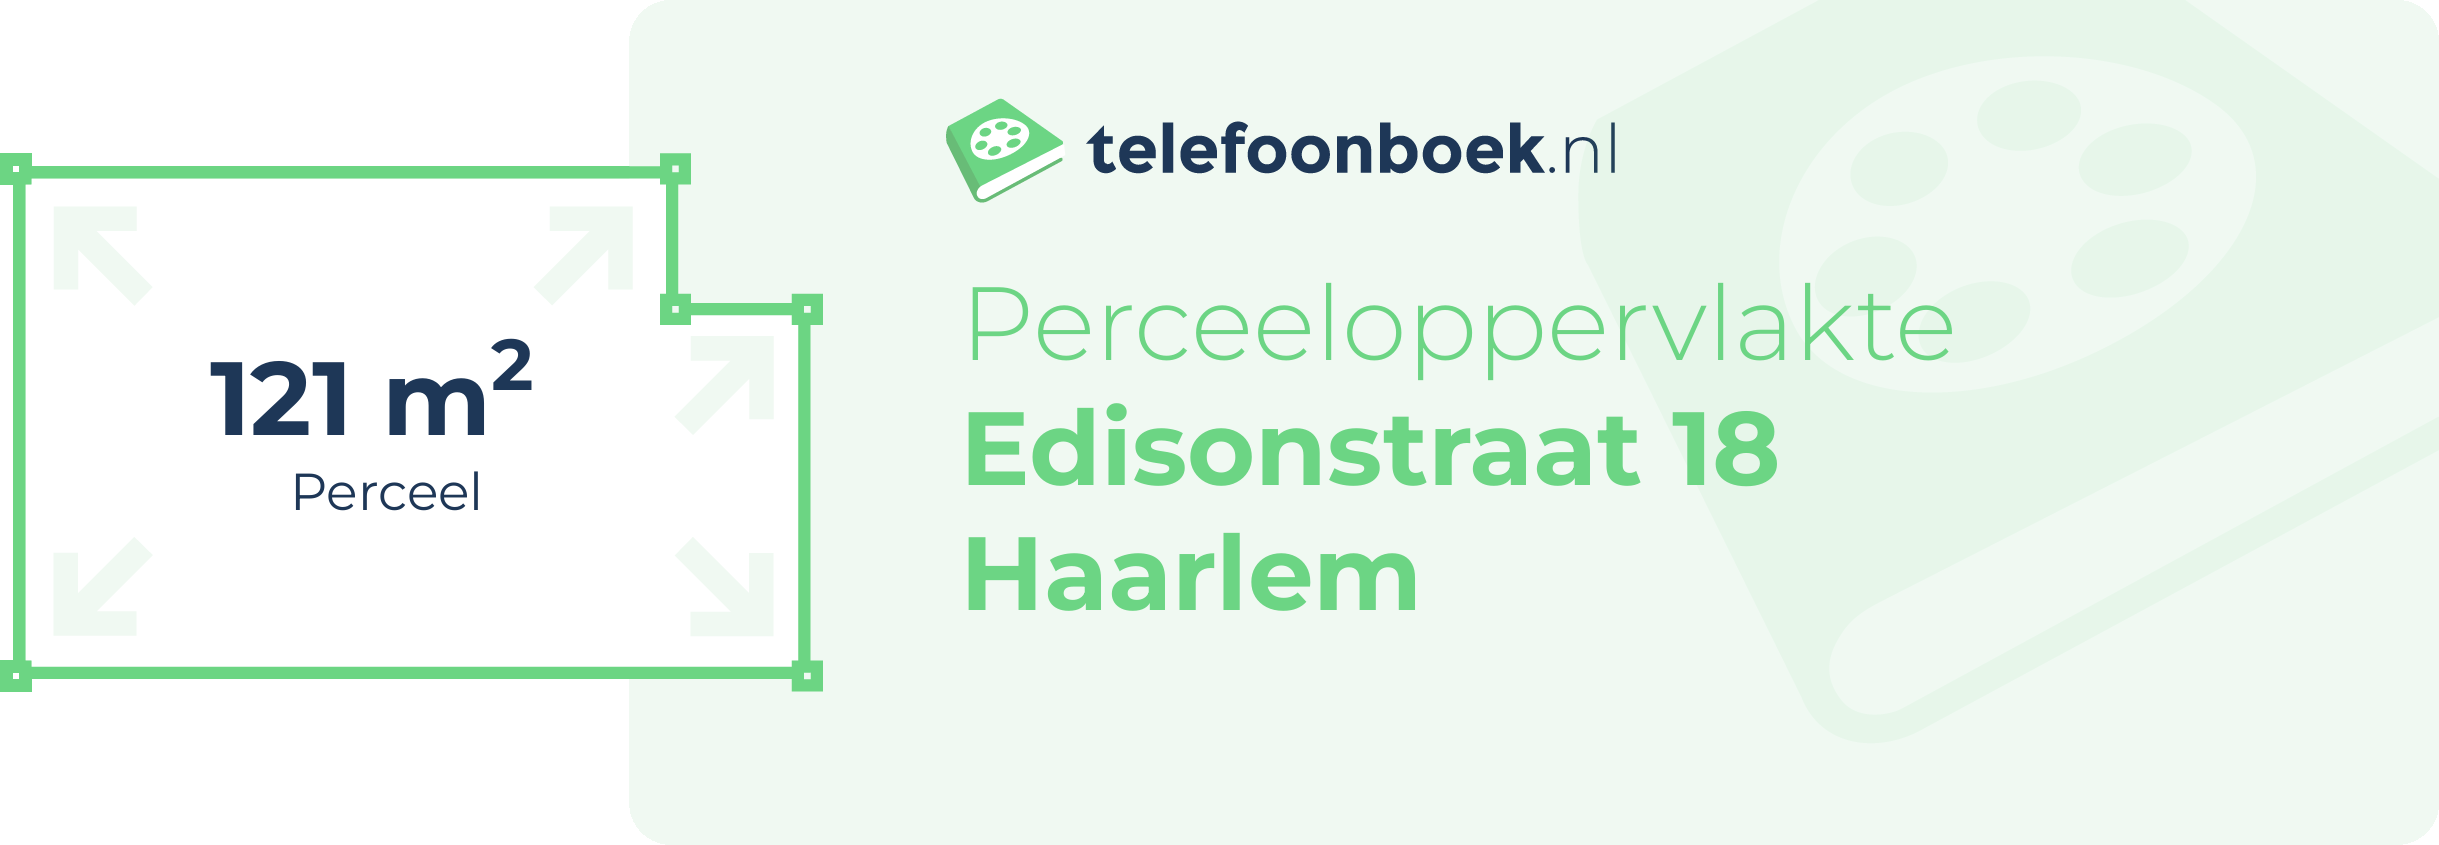 Perceeloppervlakte Edisonstraat 18 Haarlem